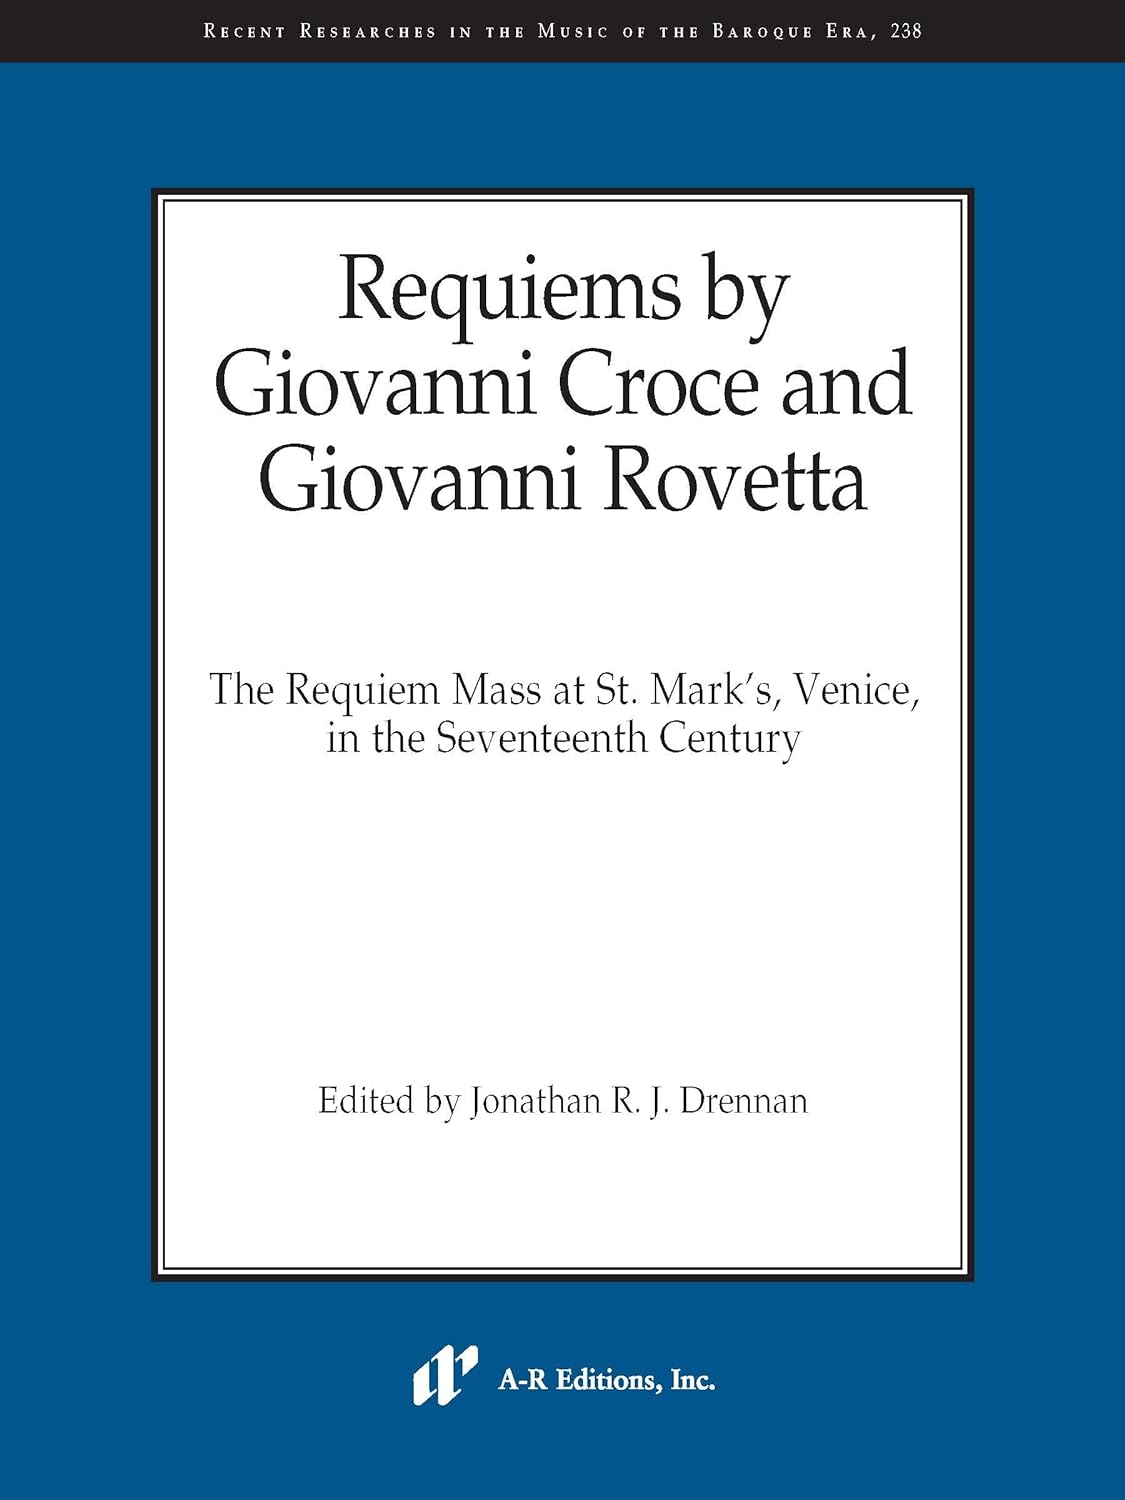 Croce Rovetta Requiems RRMBE 238